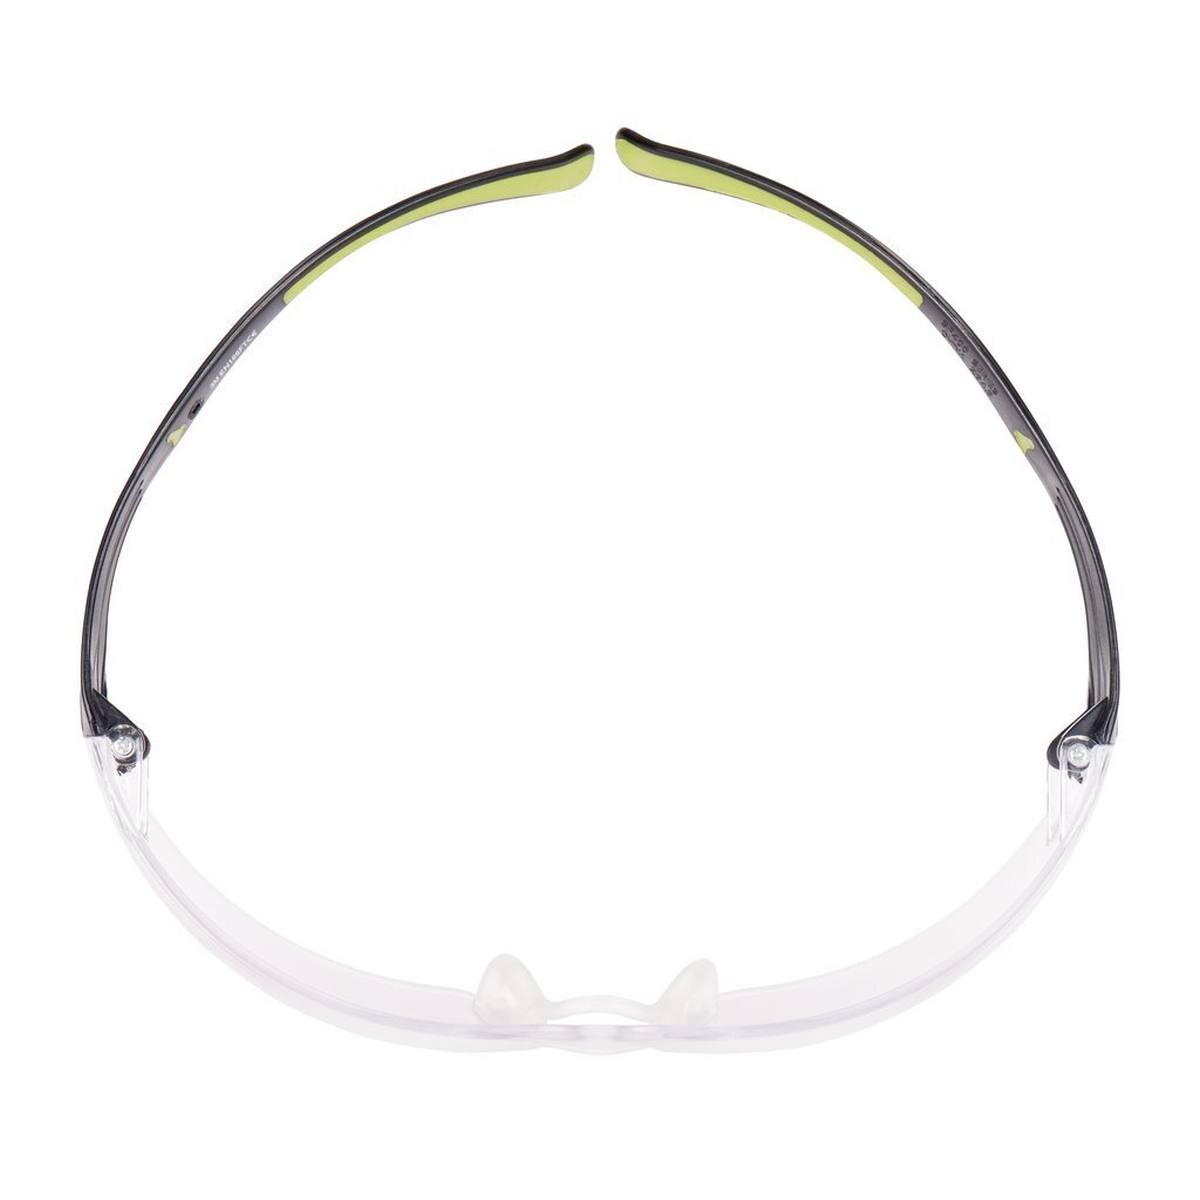 Gafas de protección 3M SecureFit 400, patillas negras/verdes, tratamiento antirrayas/antivaho, lentes transparentes, SF401AS/AF-EU